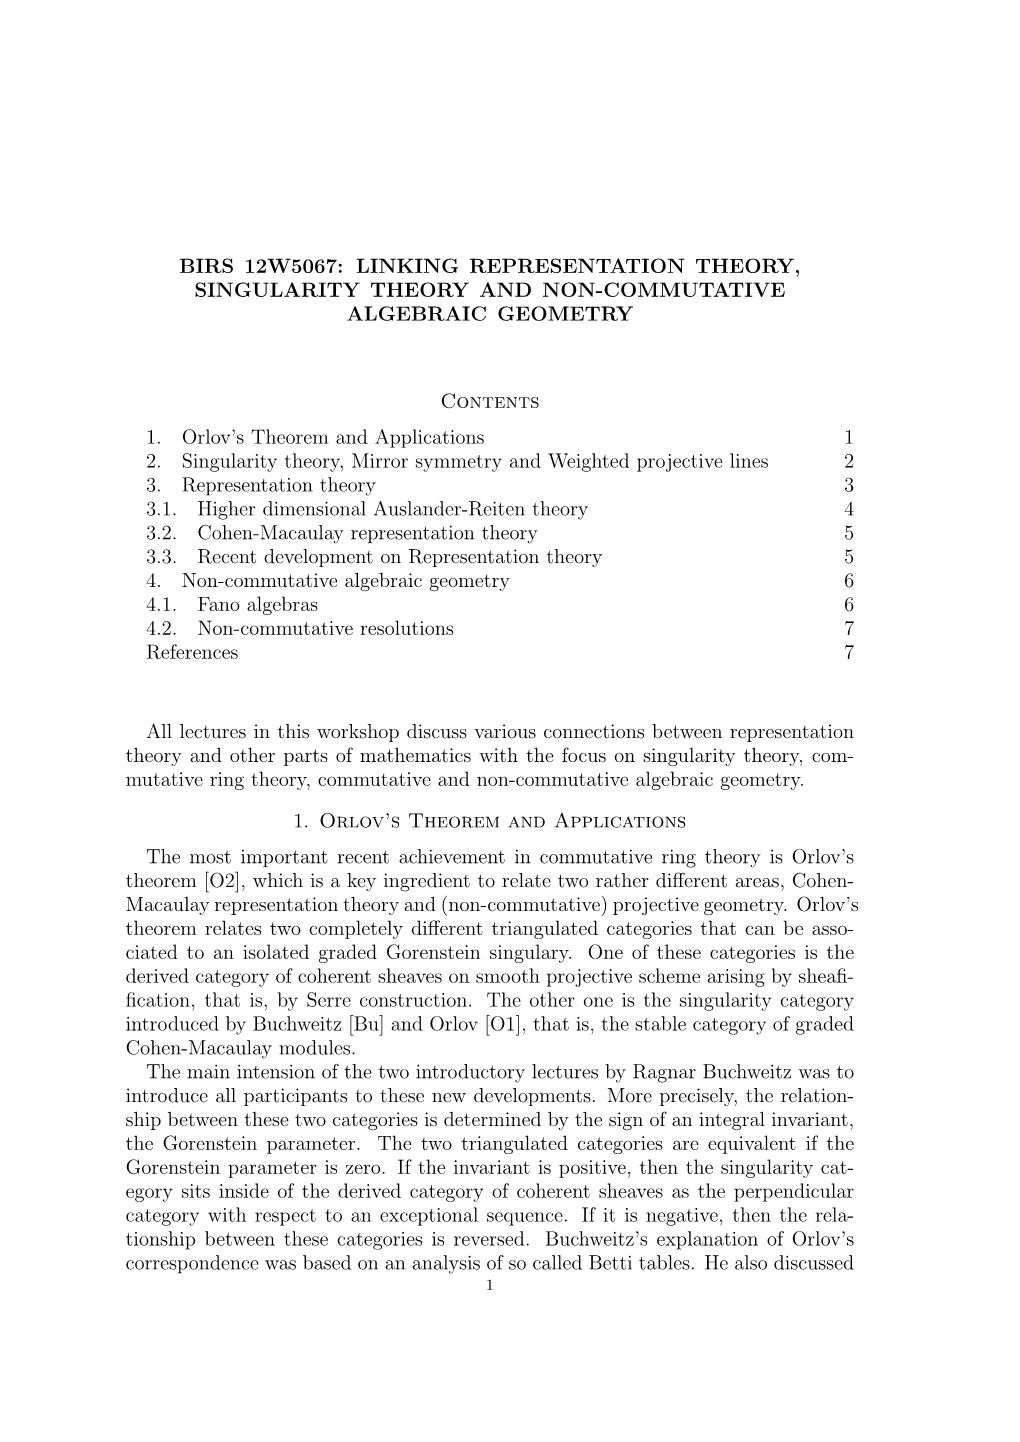 Birs 12W5067: Linking Representation Theory, Singularity Theory and Non-Commutative Algebraic Geometry